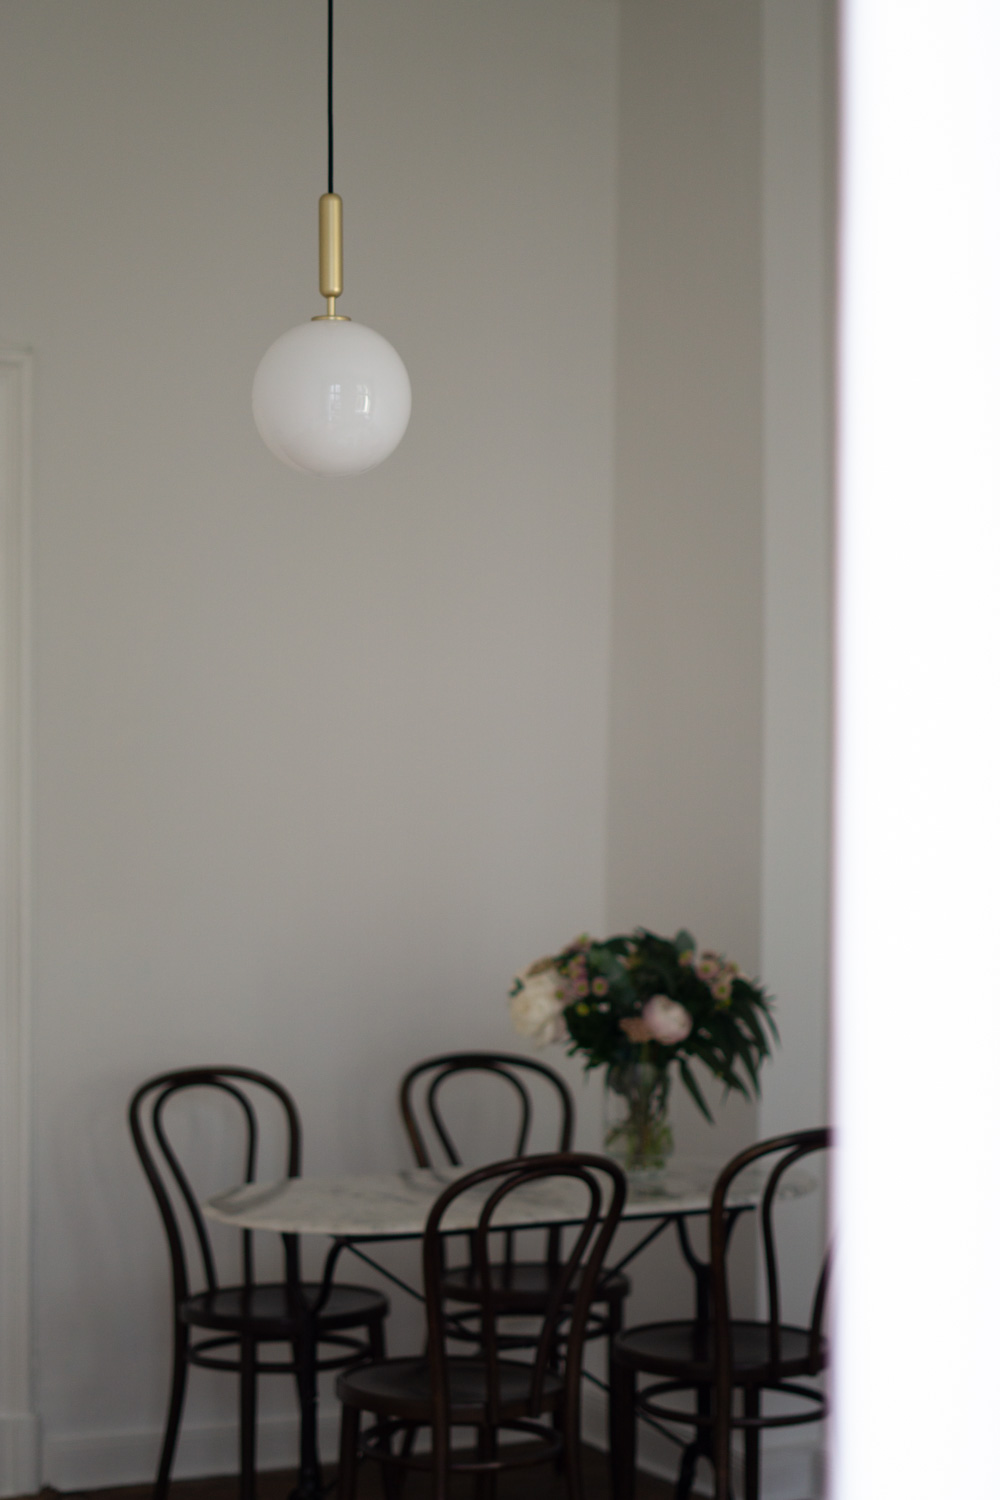 Nuura Lighting, Danish Design, Gold Ball Ceiling Lamp, Wood Floors, White Interior, Miira, Minimalist Home, Classic Interior, Timeless Style, Scandinavian Decor, Neutral Aesthetic